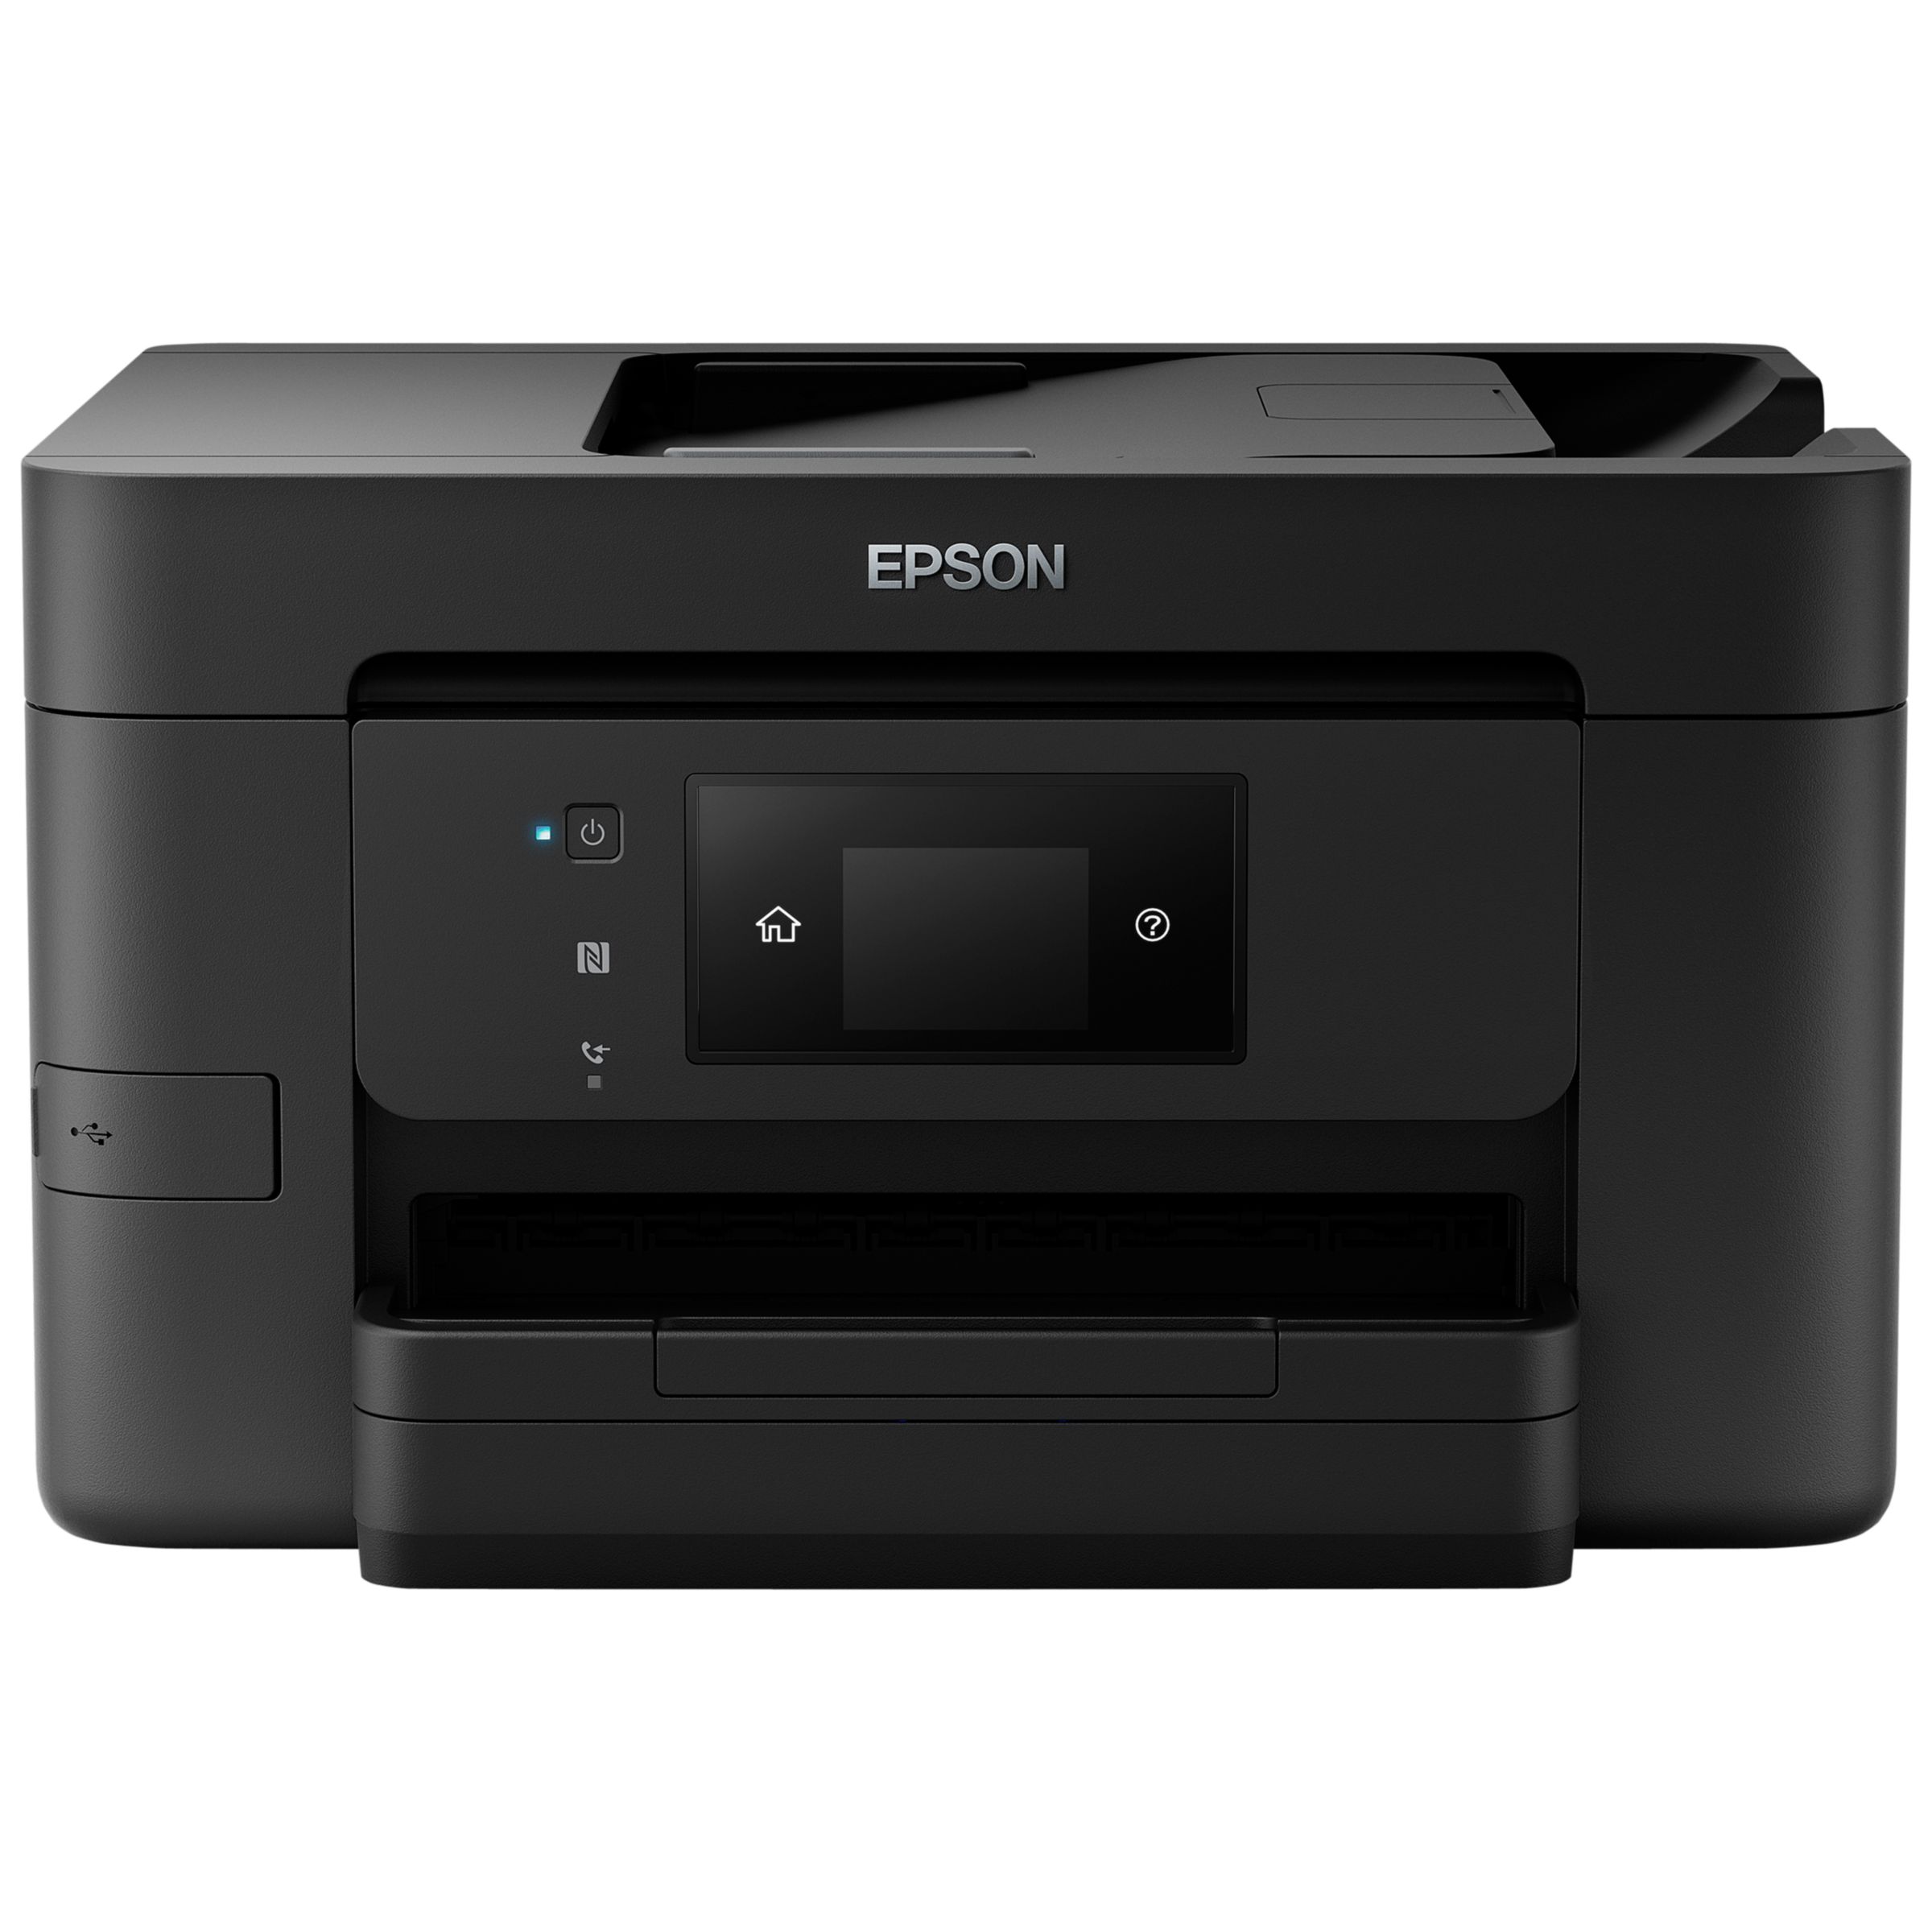  Epson  WorkForce WF 3720  All In One Wireless Printer Black 